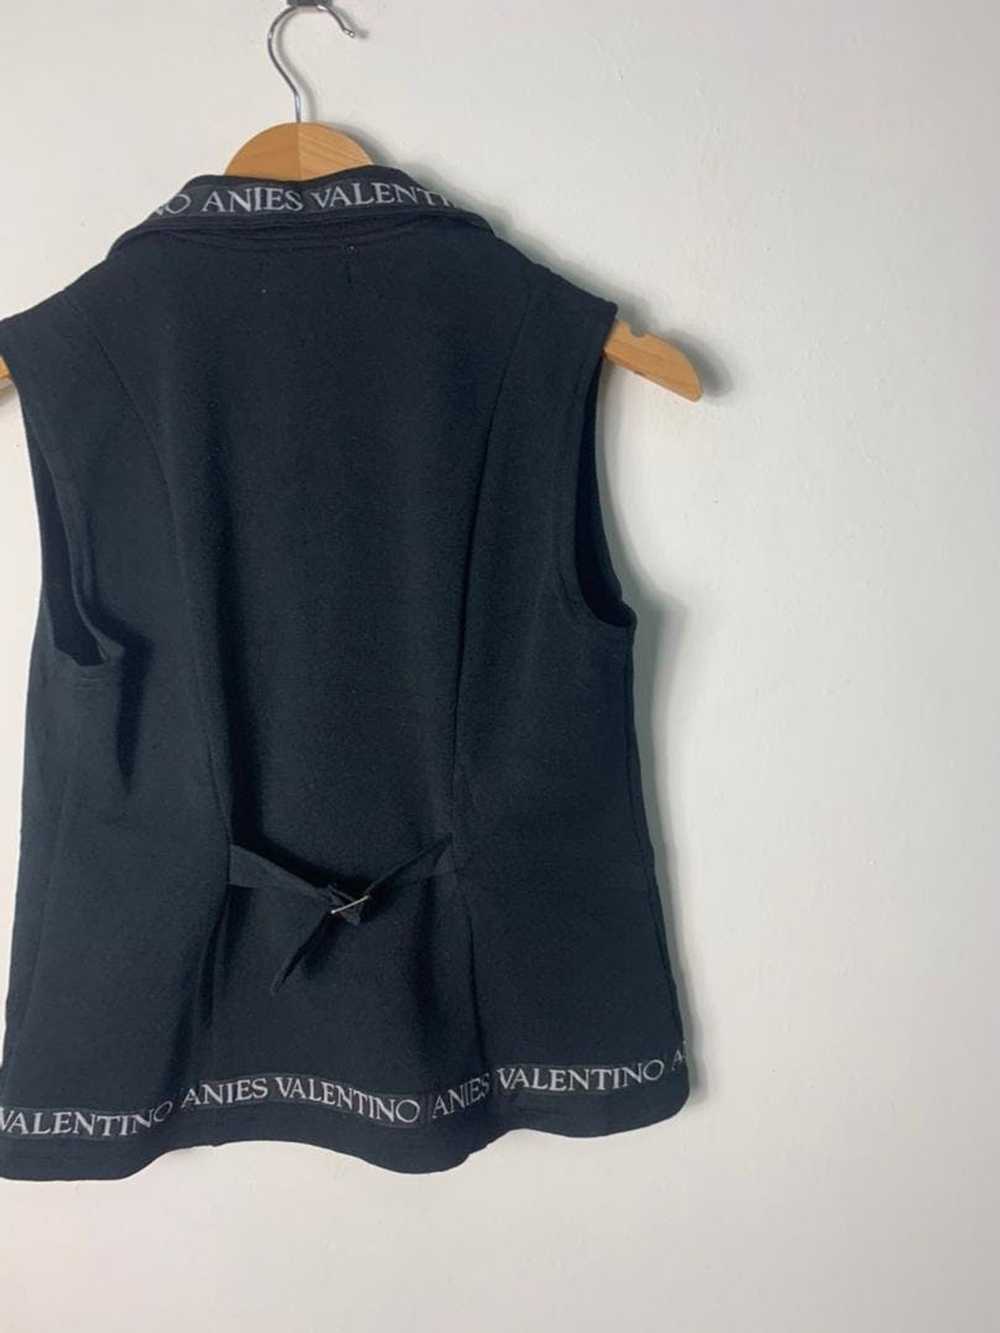 Valentino Vintage Anies Valentino Black Vest - image 5